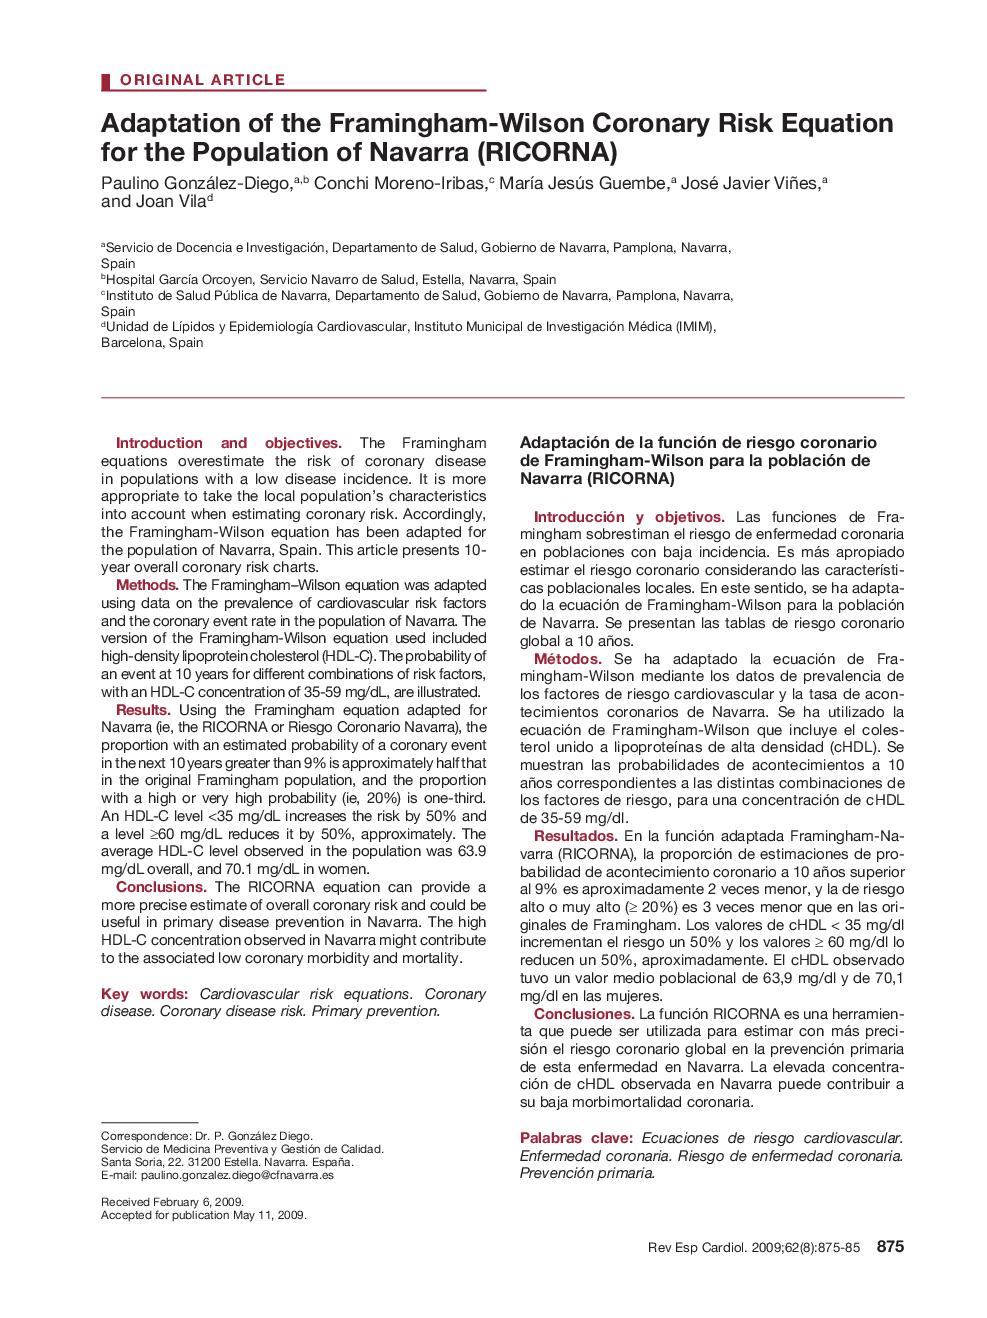 Adaptation of the Framingham-Wilson Coronary Risk Equation for the Population of Navarra (RICORNA)